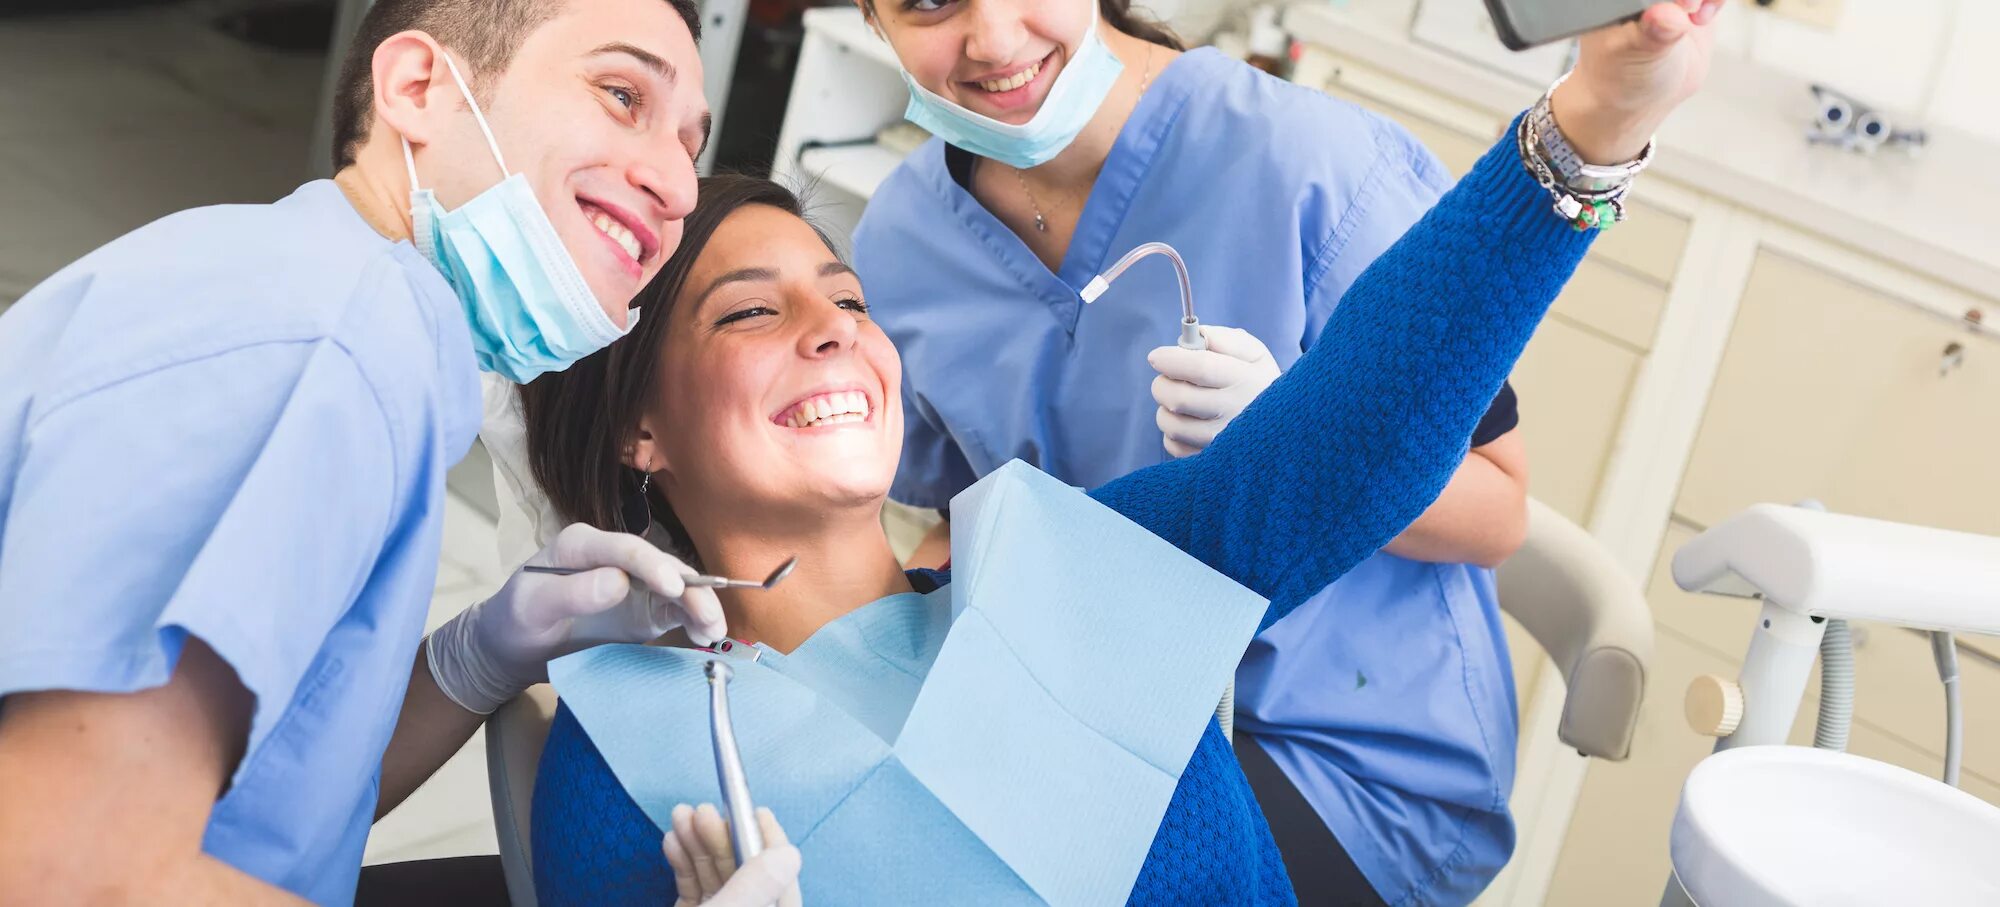 Три стоматолога. Счастливый пациент стоматолога. Прием врача стоматолога. Стоматолог и пациент улыбаются. Общение со стоматологом.